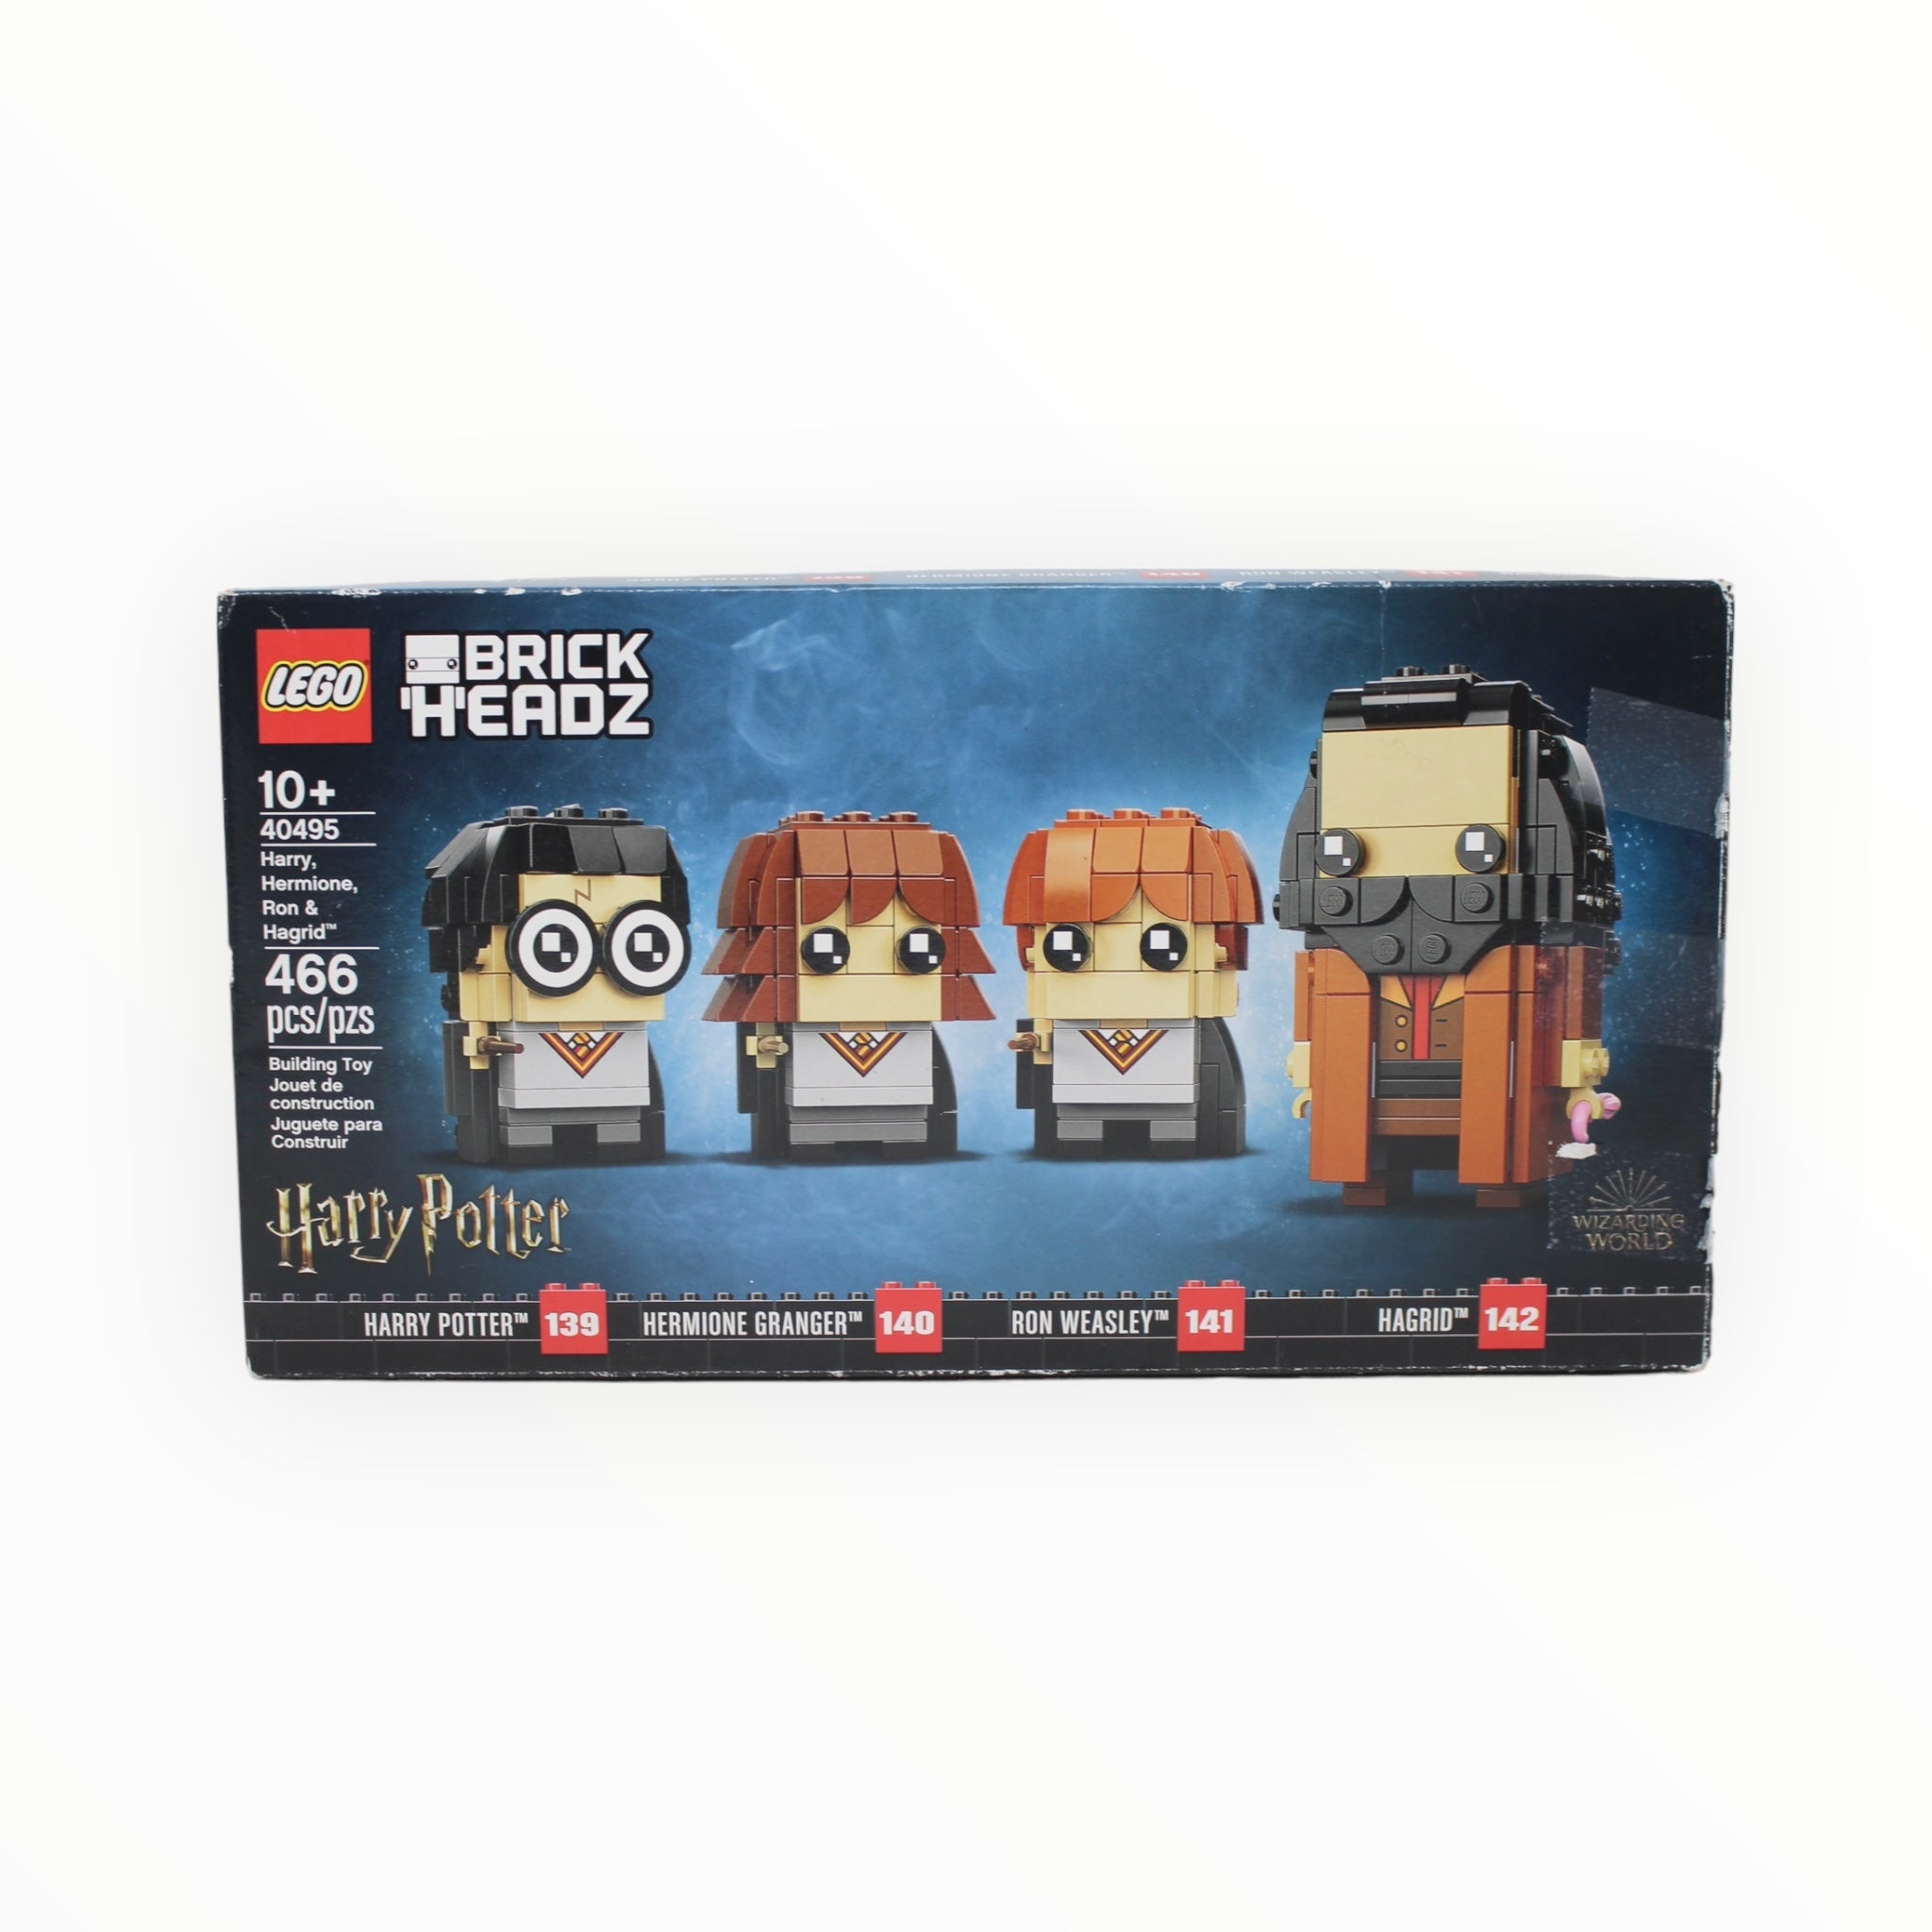 Certified Used Set 40495 Harry Potter BrickHeadz Harry, Hermione, Ron & Hagrid